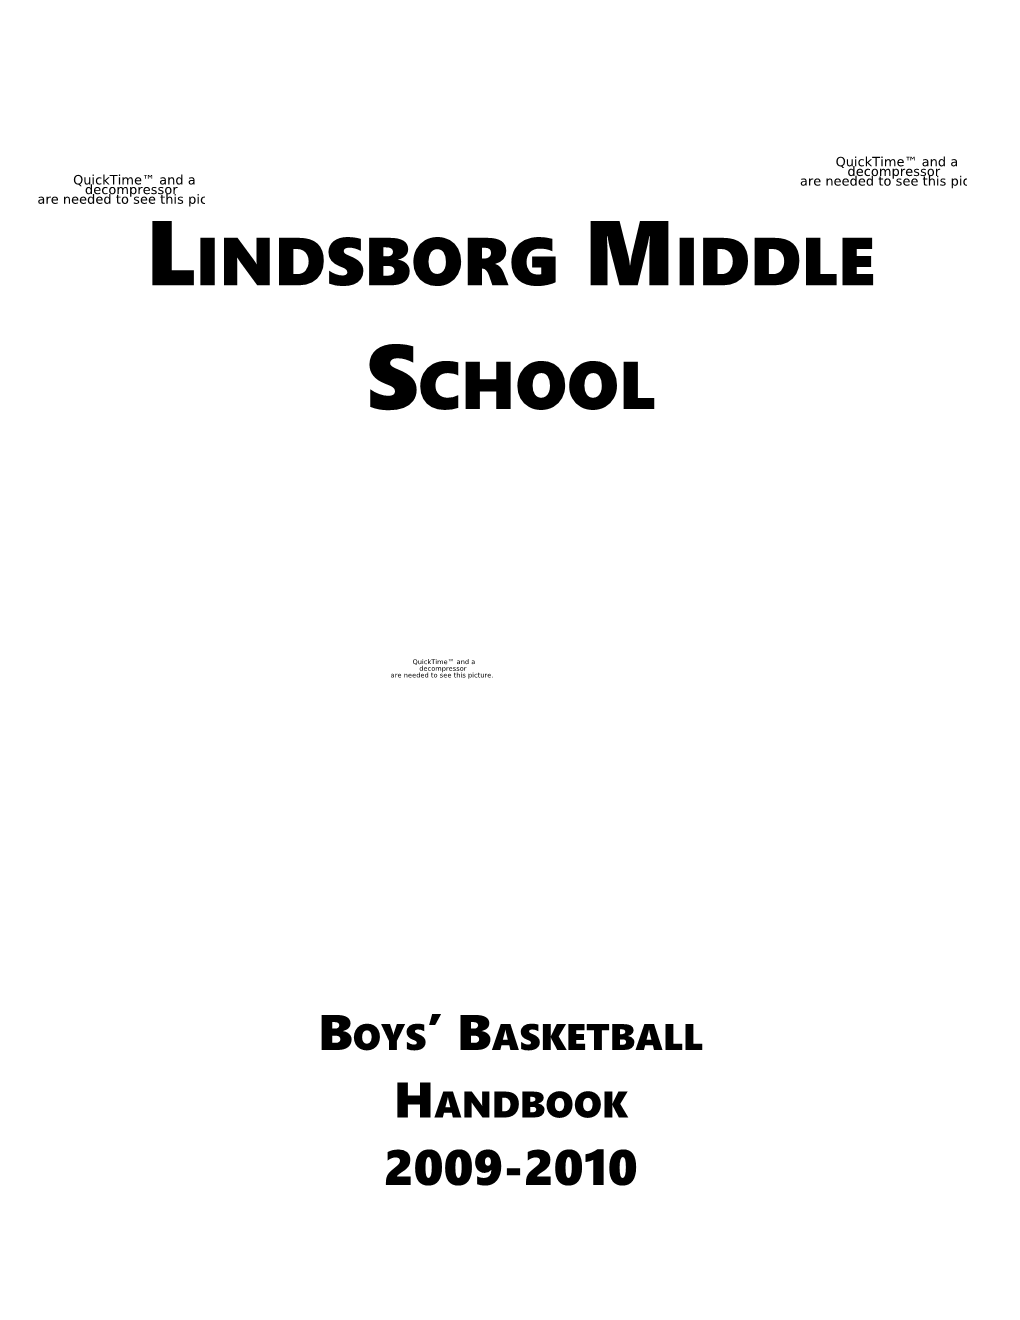 Lindsborg Middle School